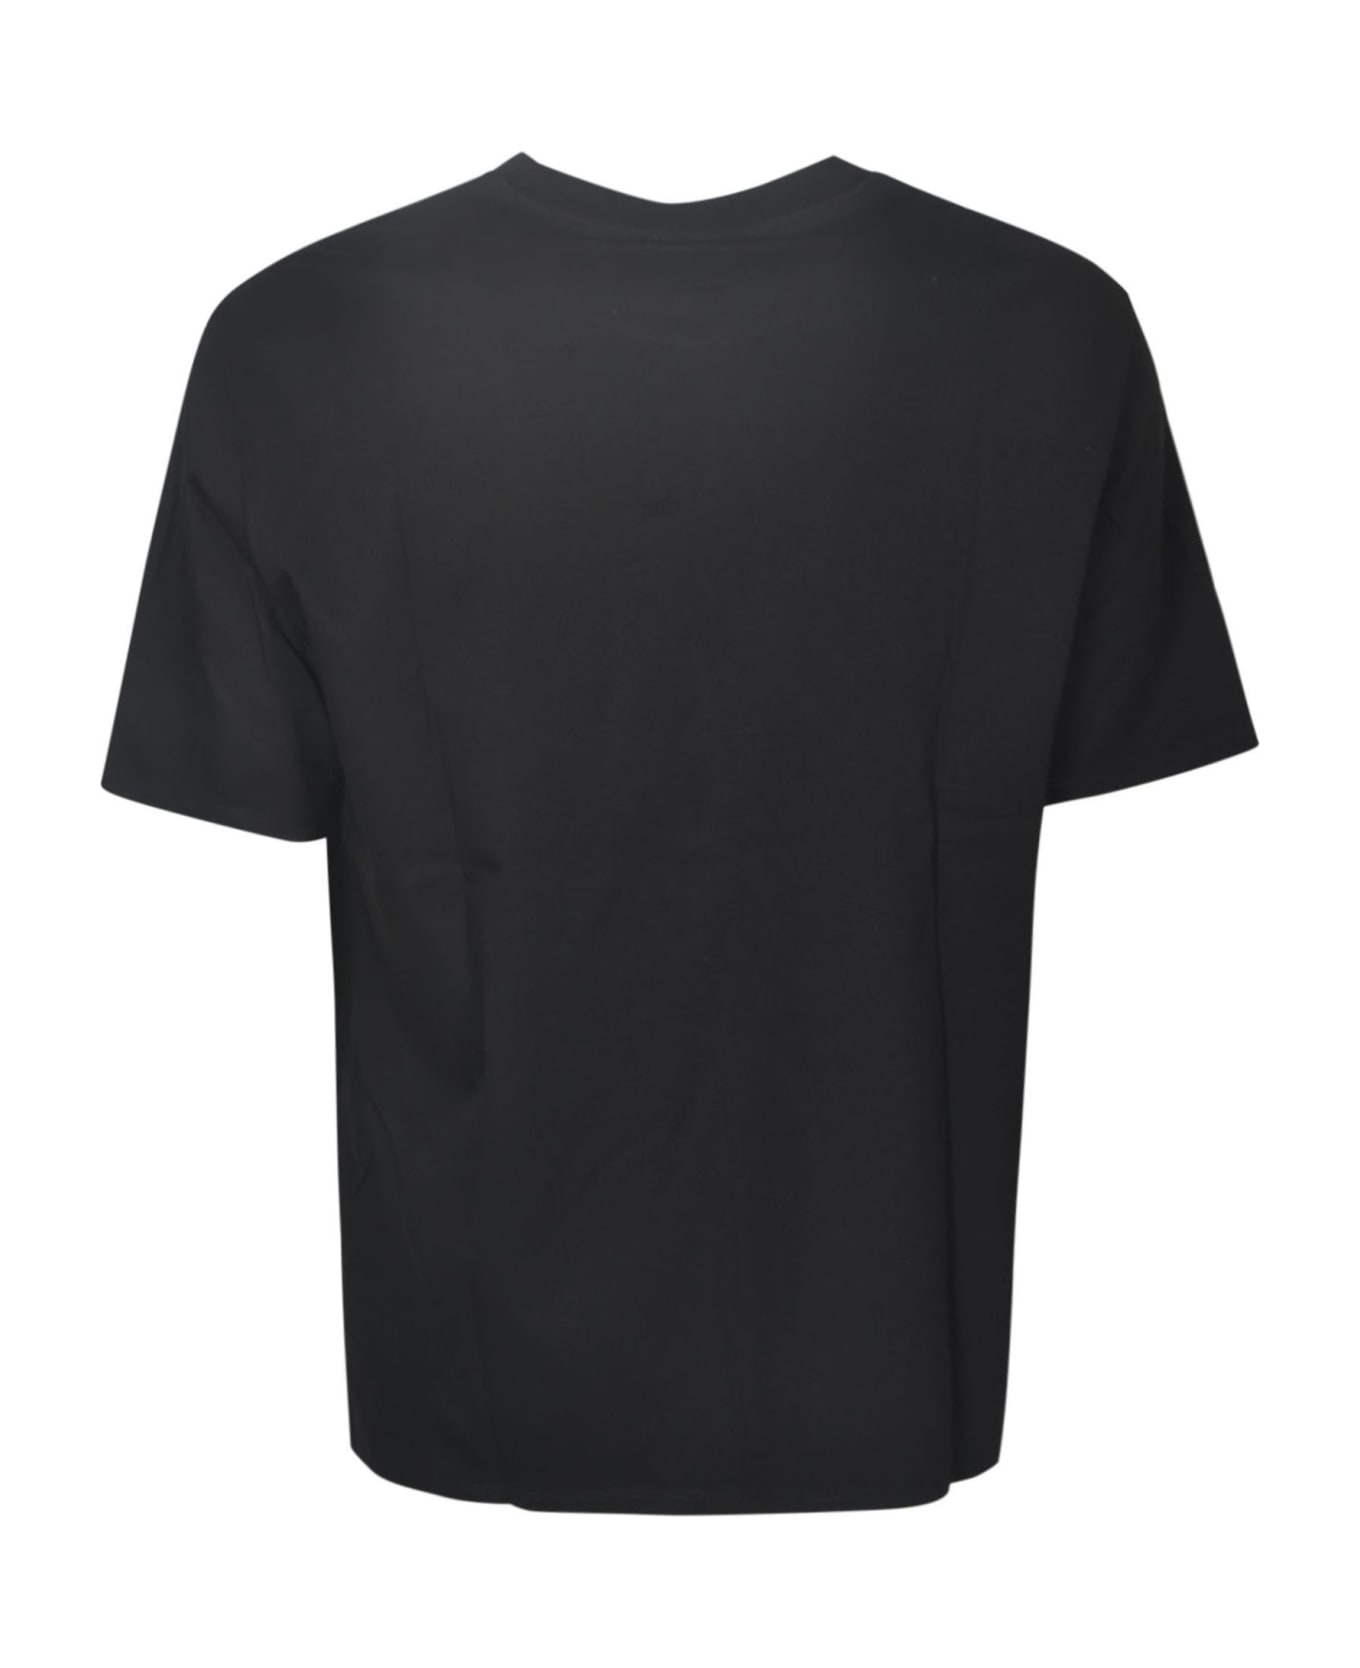 Lanvin Chest Logo Plain T-shirt - Black